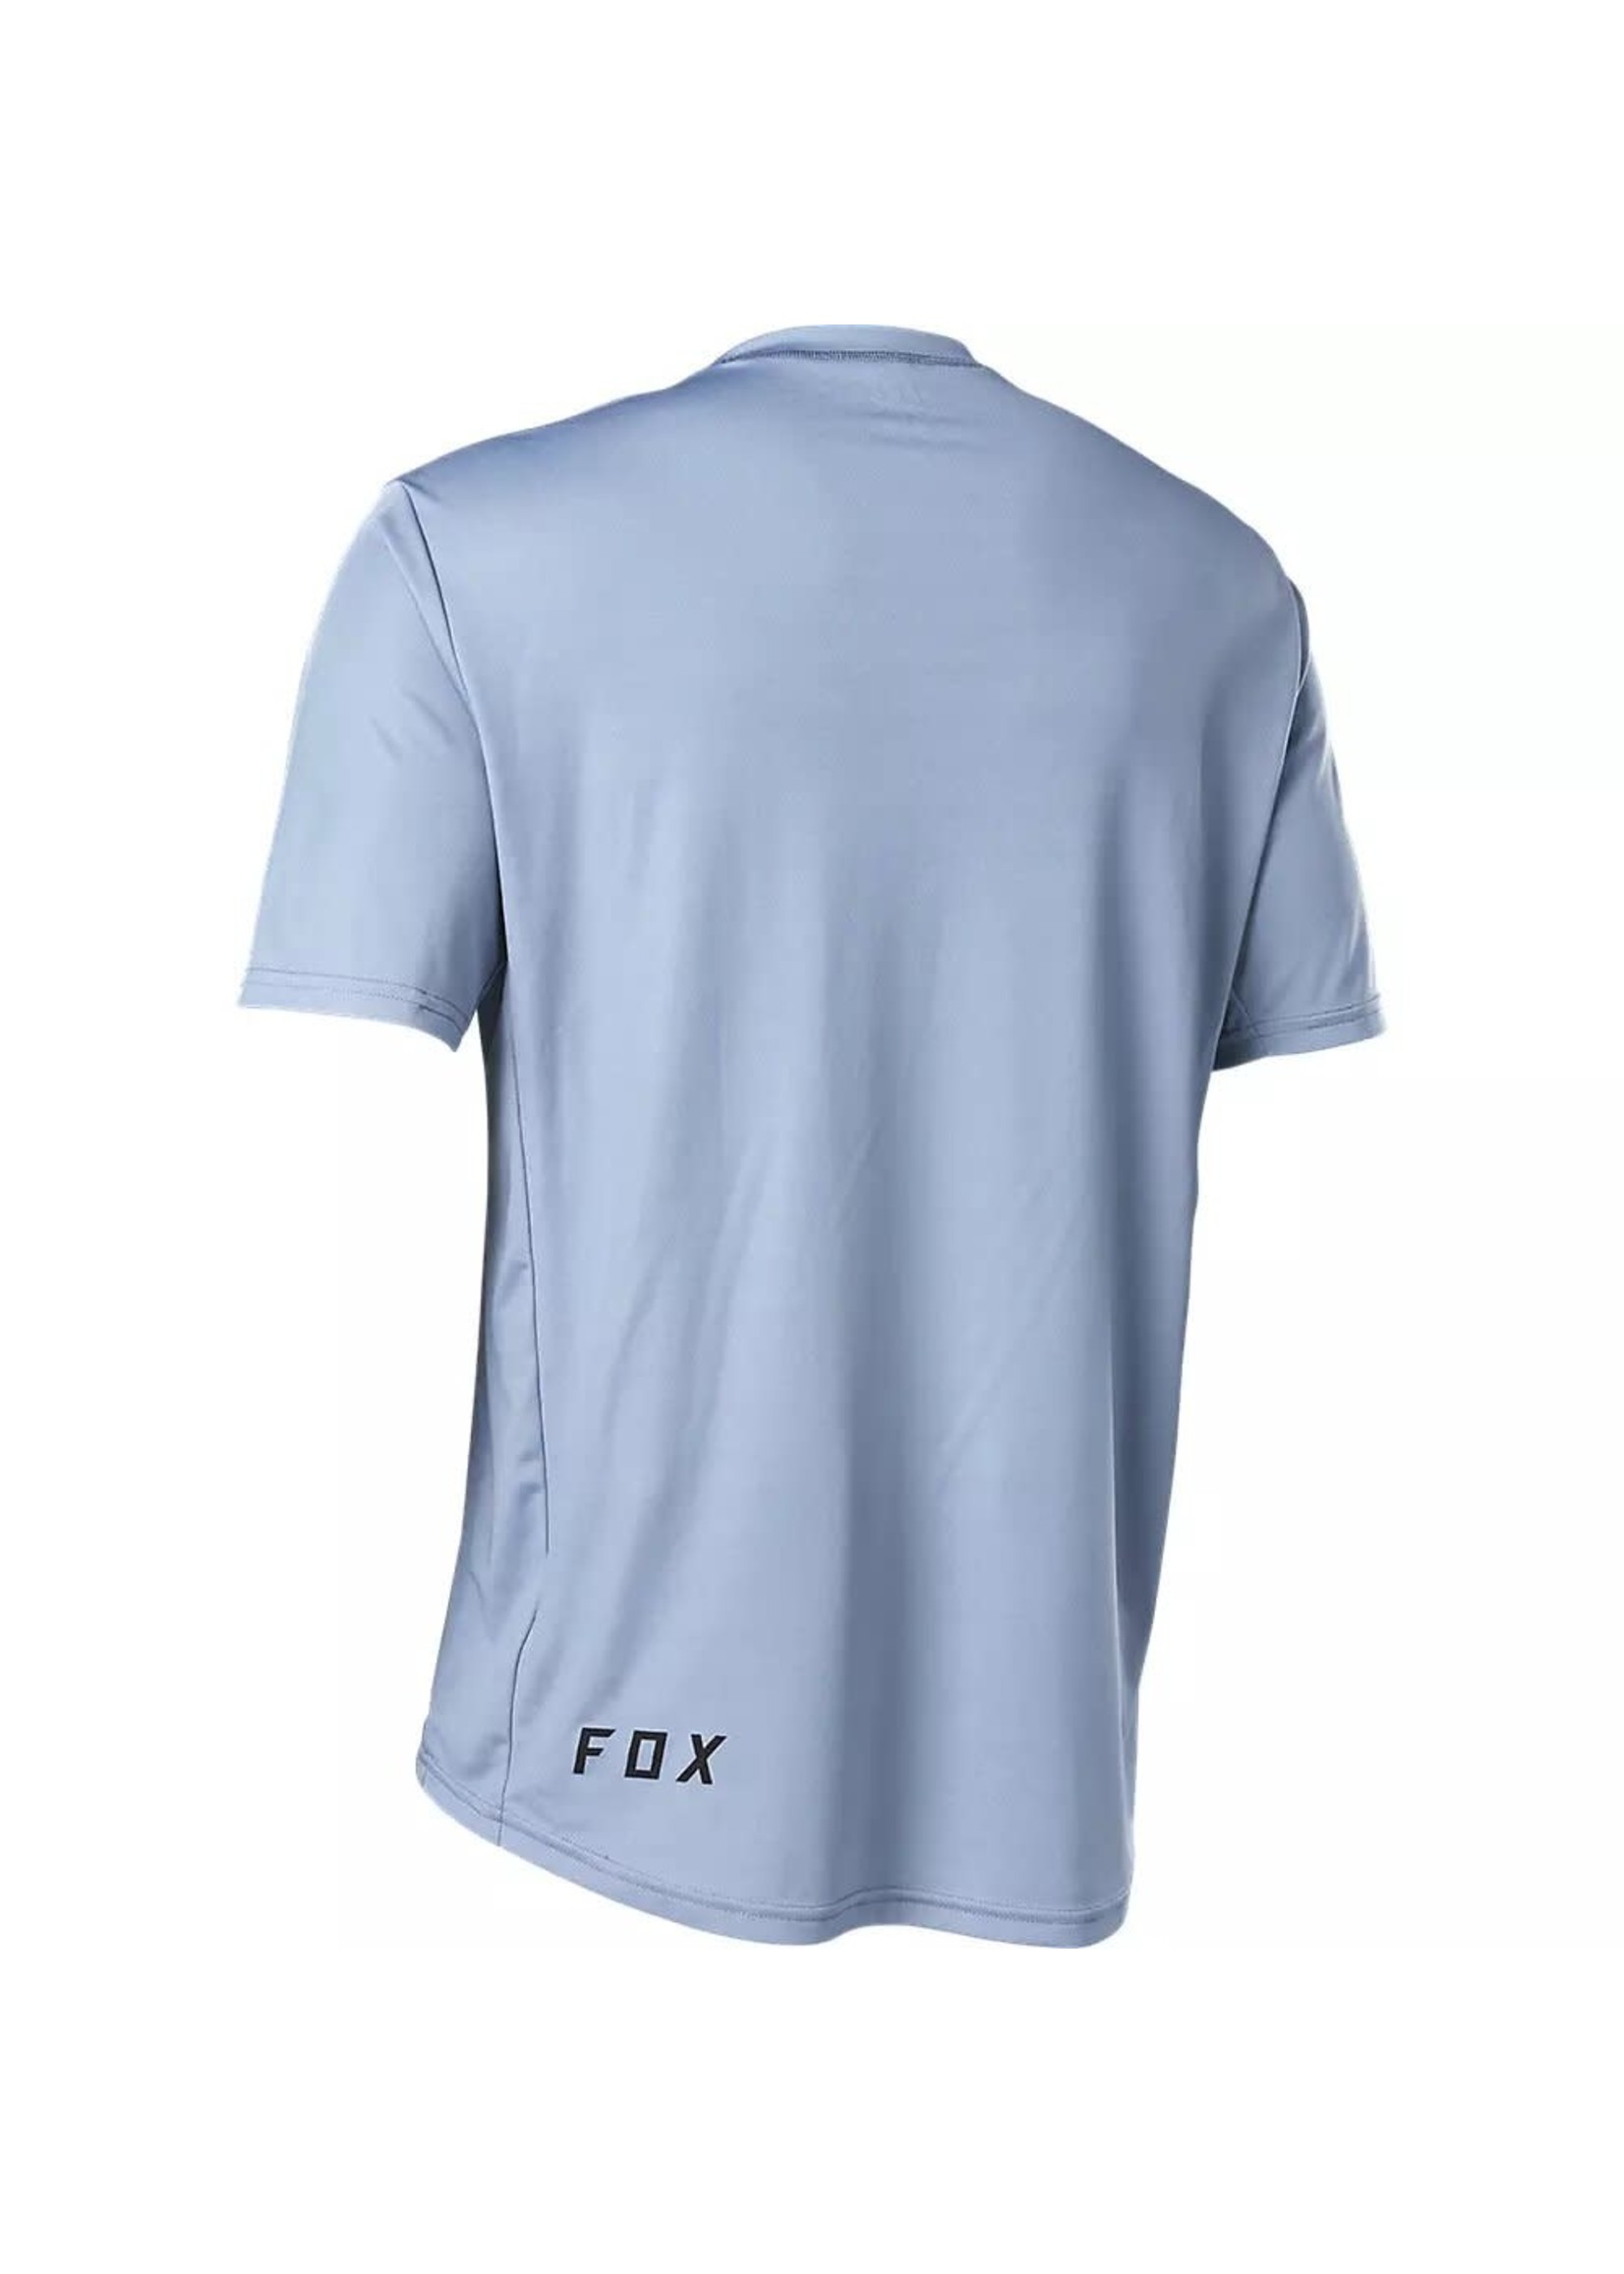 FOX T-shirt RANGER (Homme)